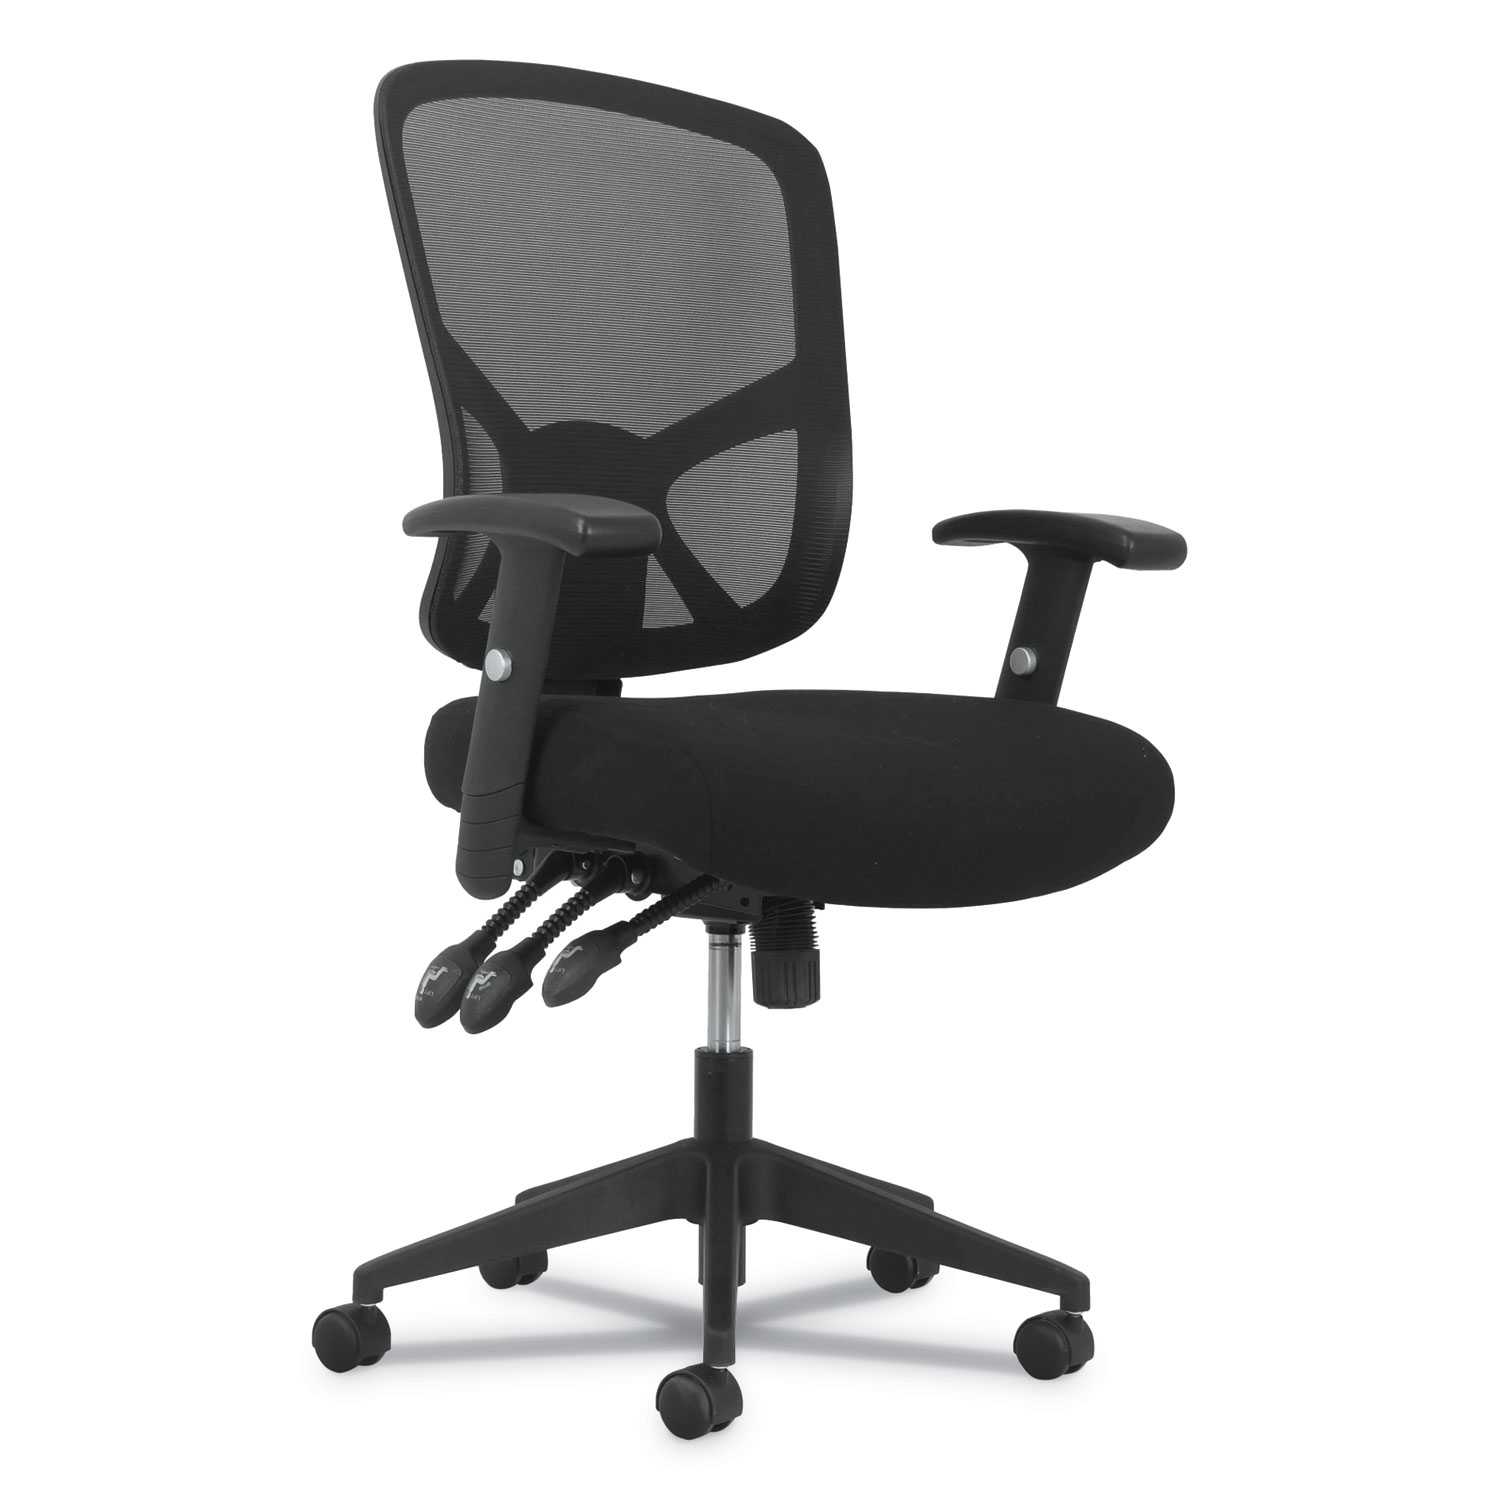  Sadie HVST121 1-Twenty-One High-Back Task Chair, Supports up to 250 lbs., Black Seat/Black Back, Black Base (BSXVST121) 